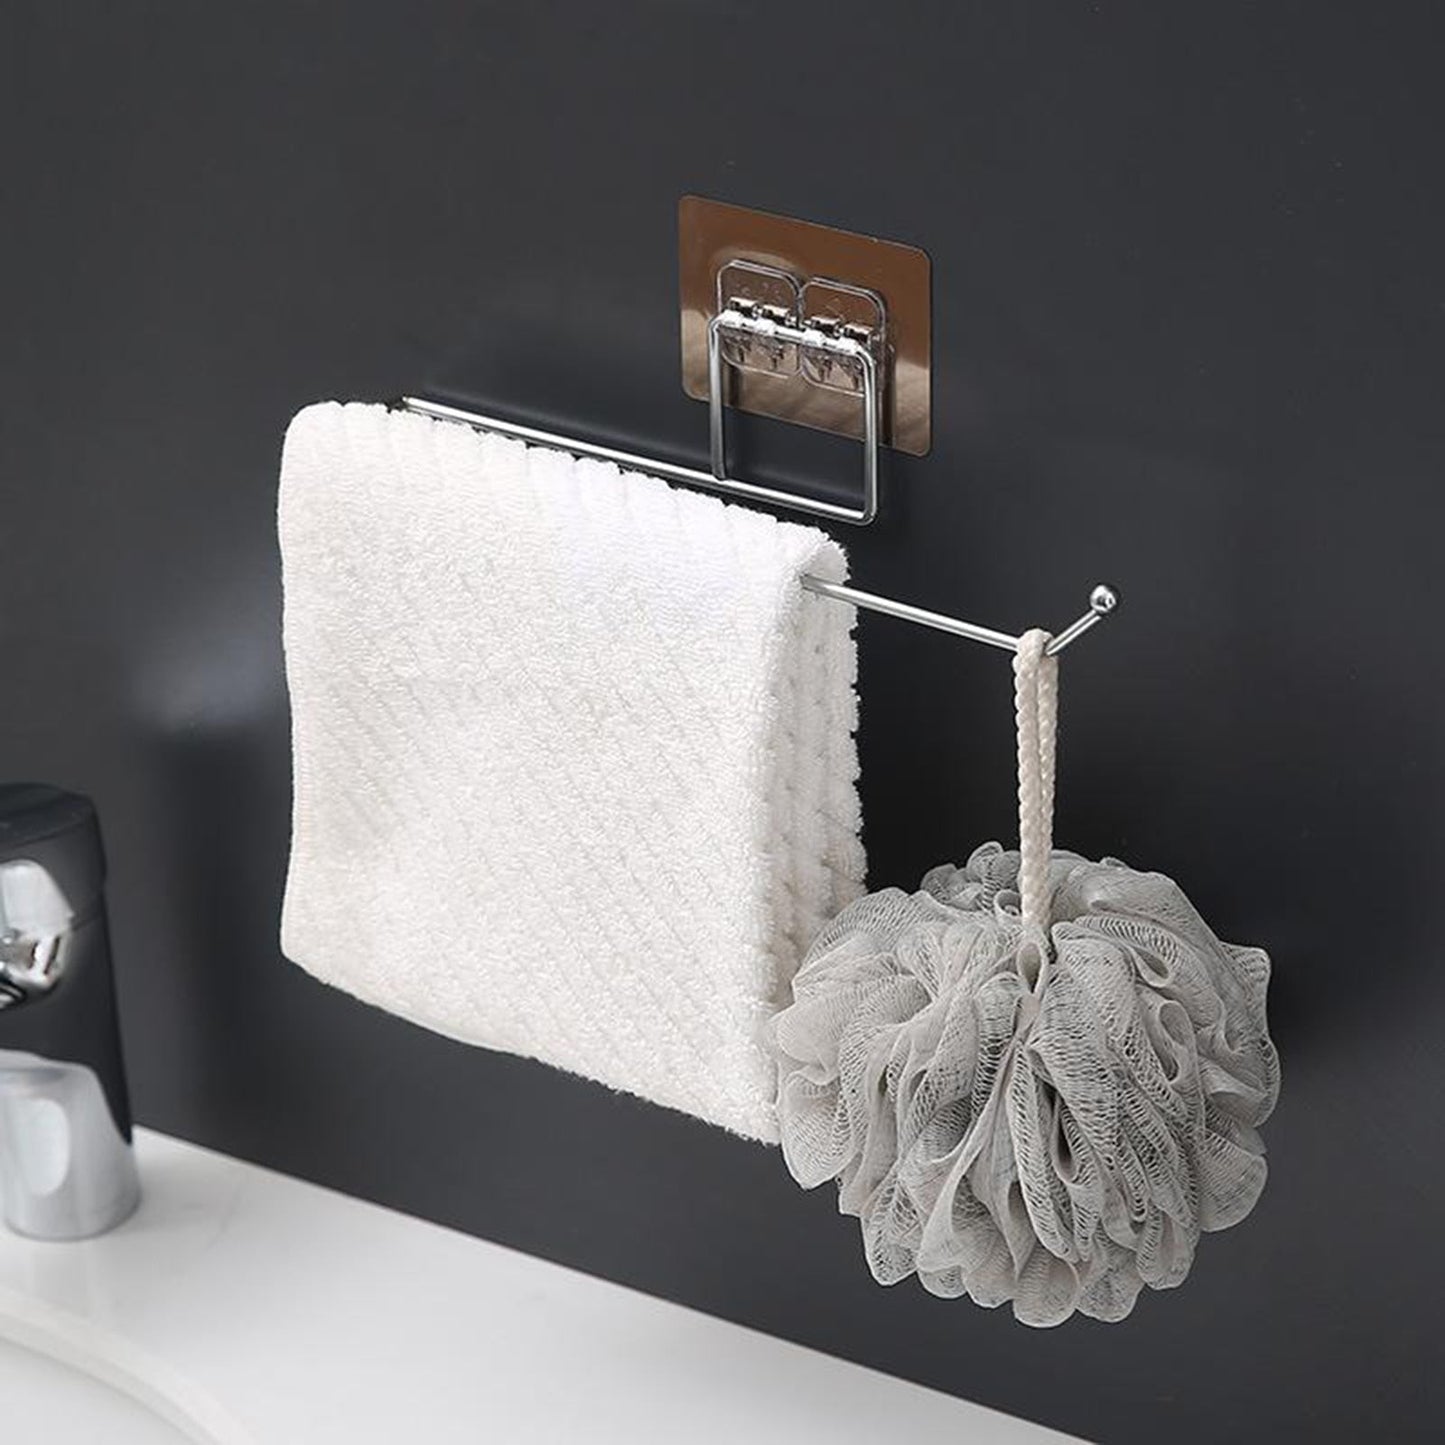 HULIANFU Toilet Paper Towel Holder Stainless Steel Self Adhesive on Smooth Surfaces